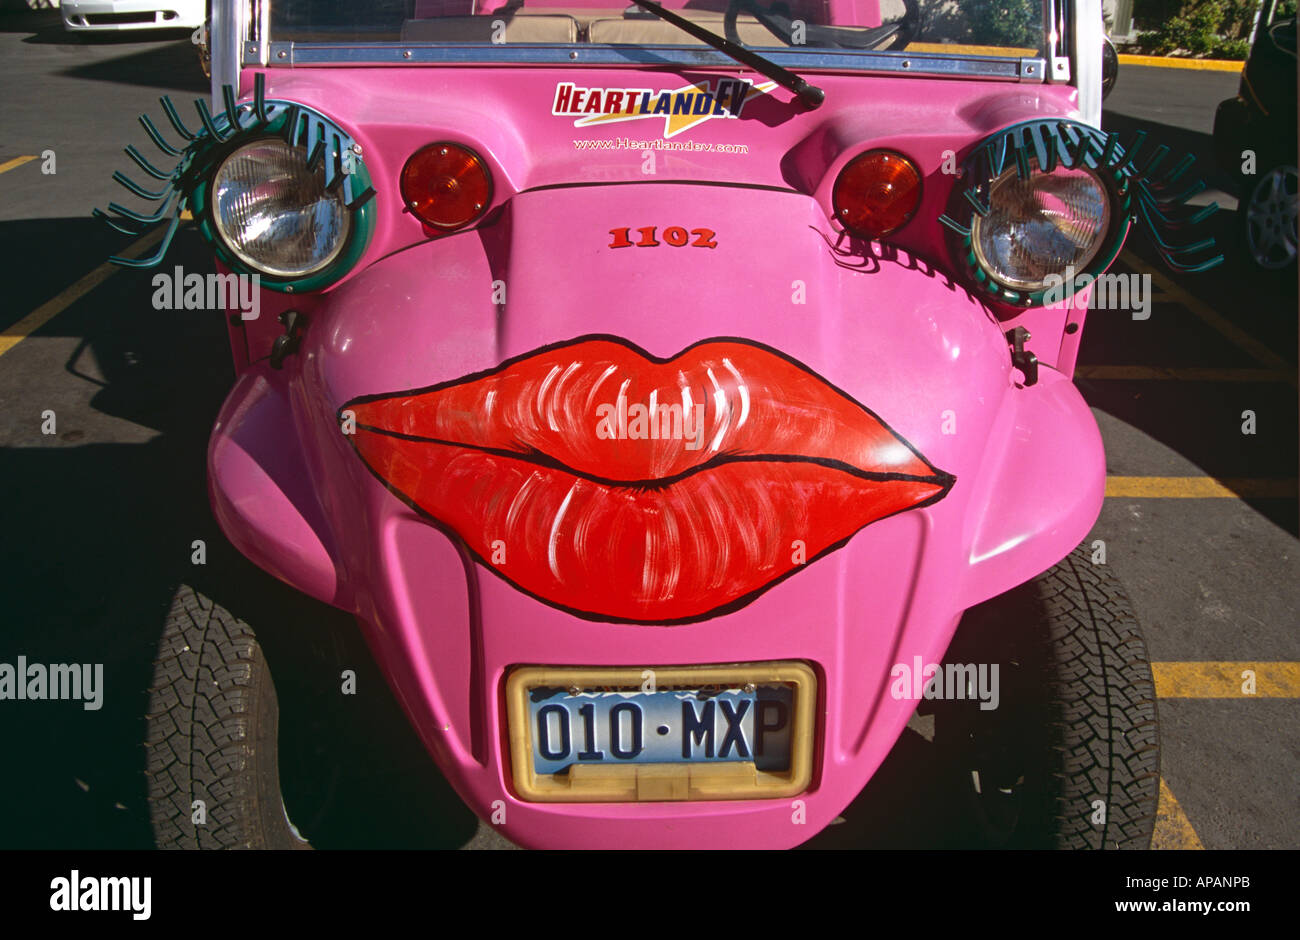 https://c8.alamy.com/comp/APANPB/brightly-coloured-car-with-large-painted-lips-and-eyelashes-las-vegas-APANPB.jpg